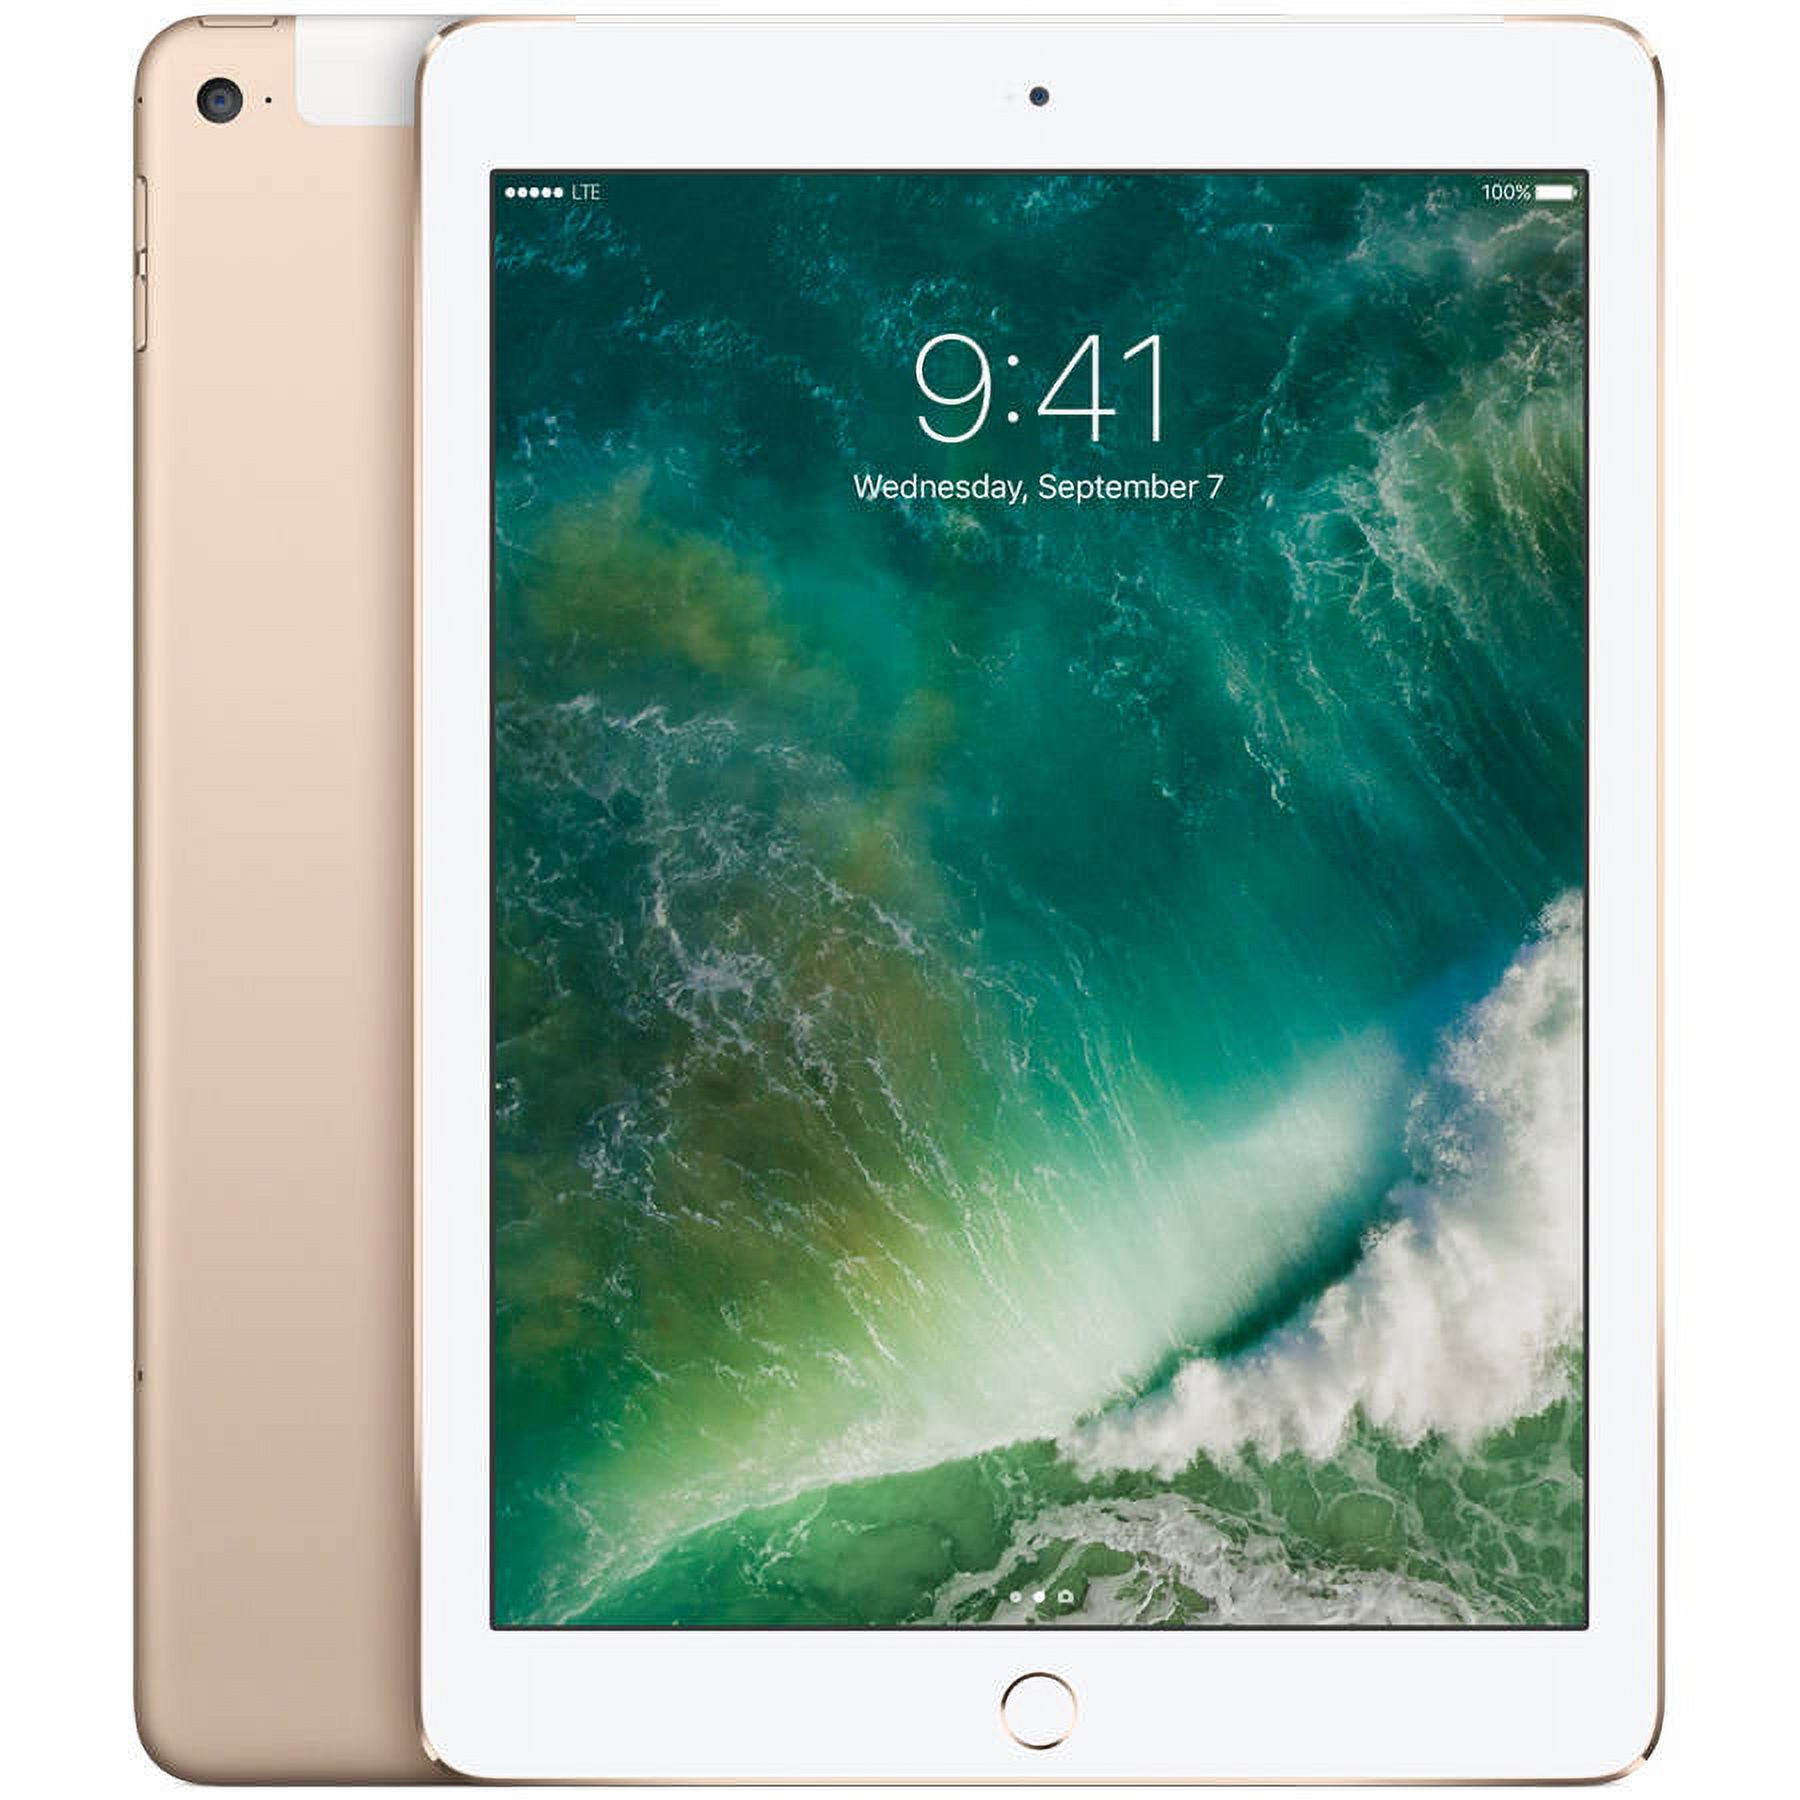 Restored Apple iPad Air 2 16GB Wi-Fi + Cellular - Gold (Refurbished) - image 2 of 3